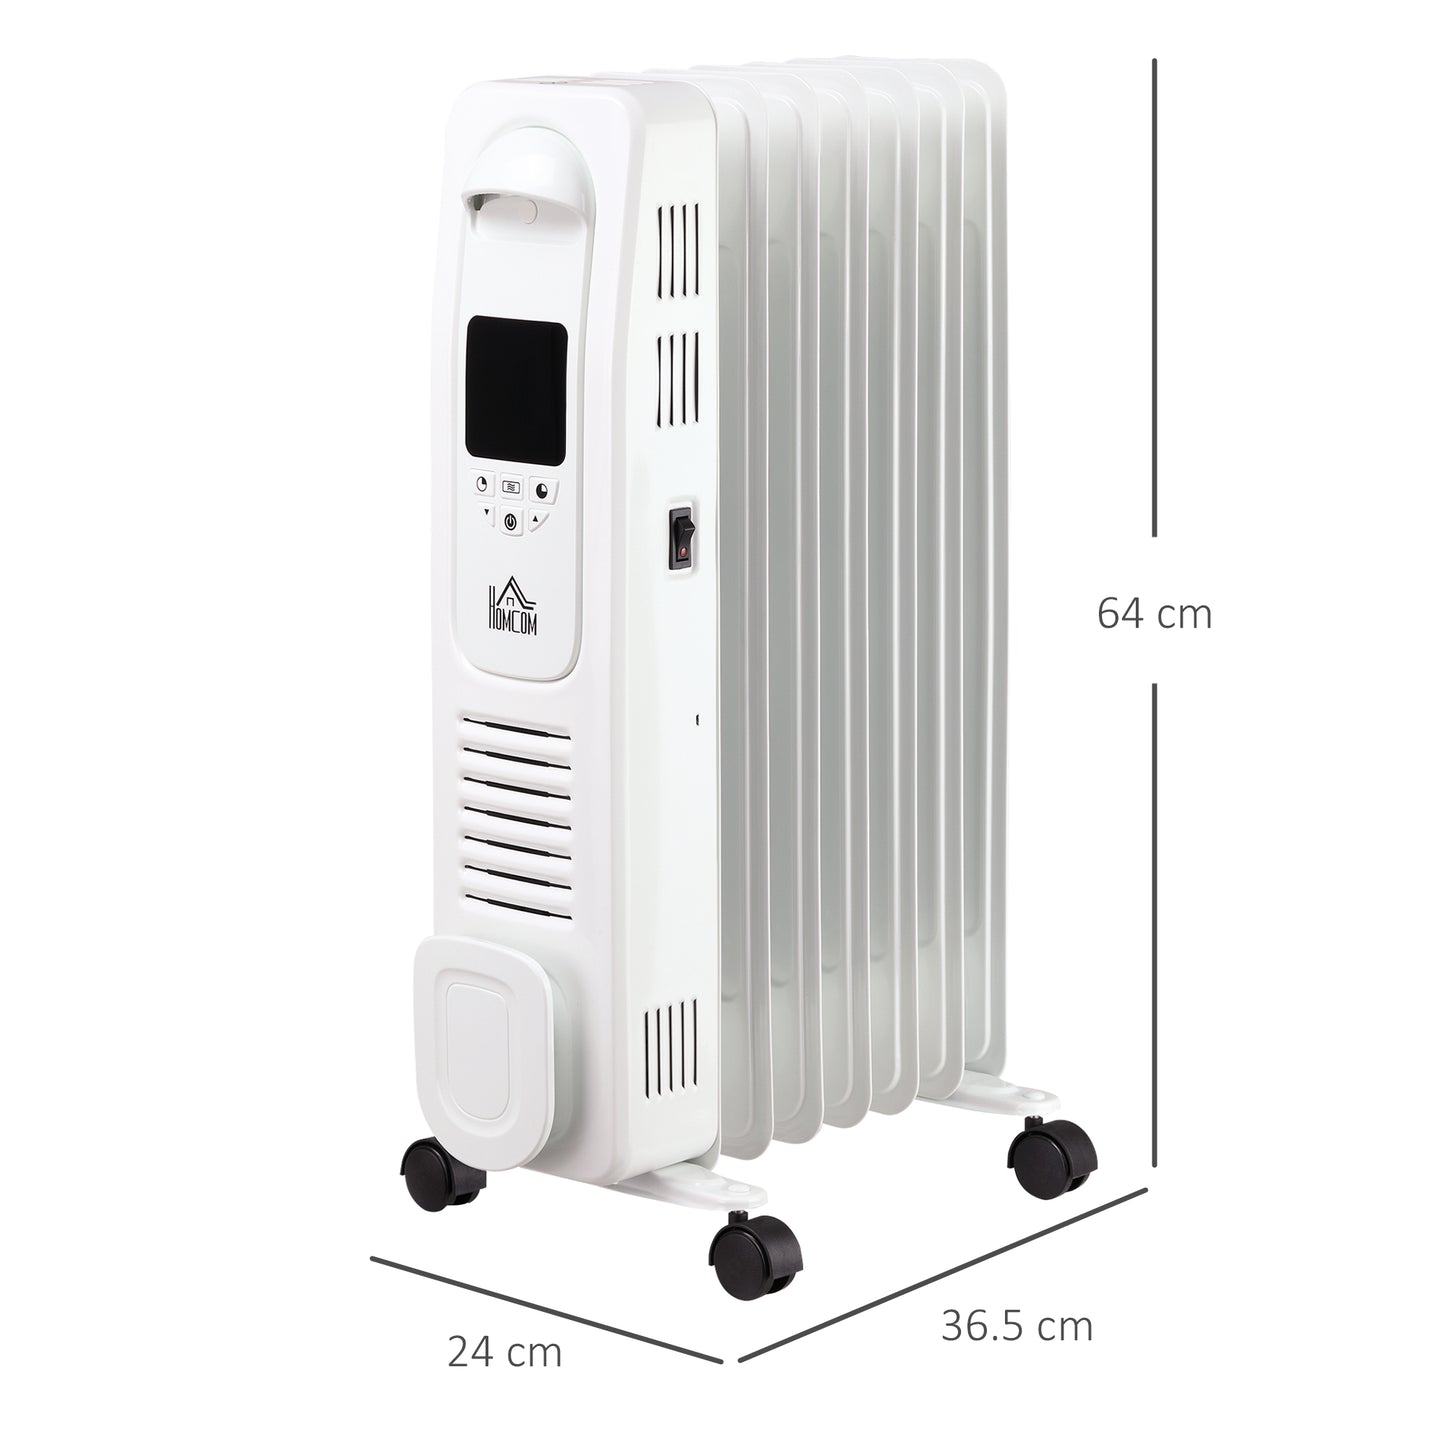 HOMCOM 1630W Oil Filled Radiator, 7 Fin Portable Heater w/ Timer Remote Control White